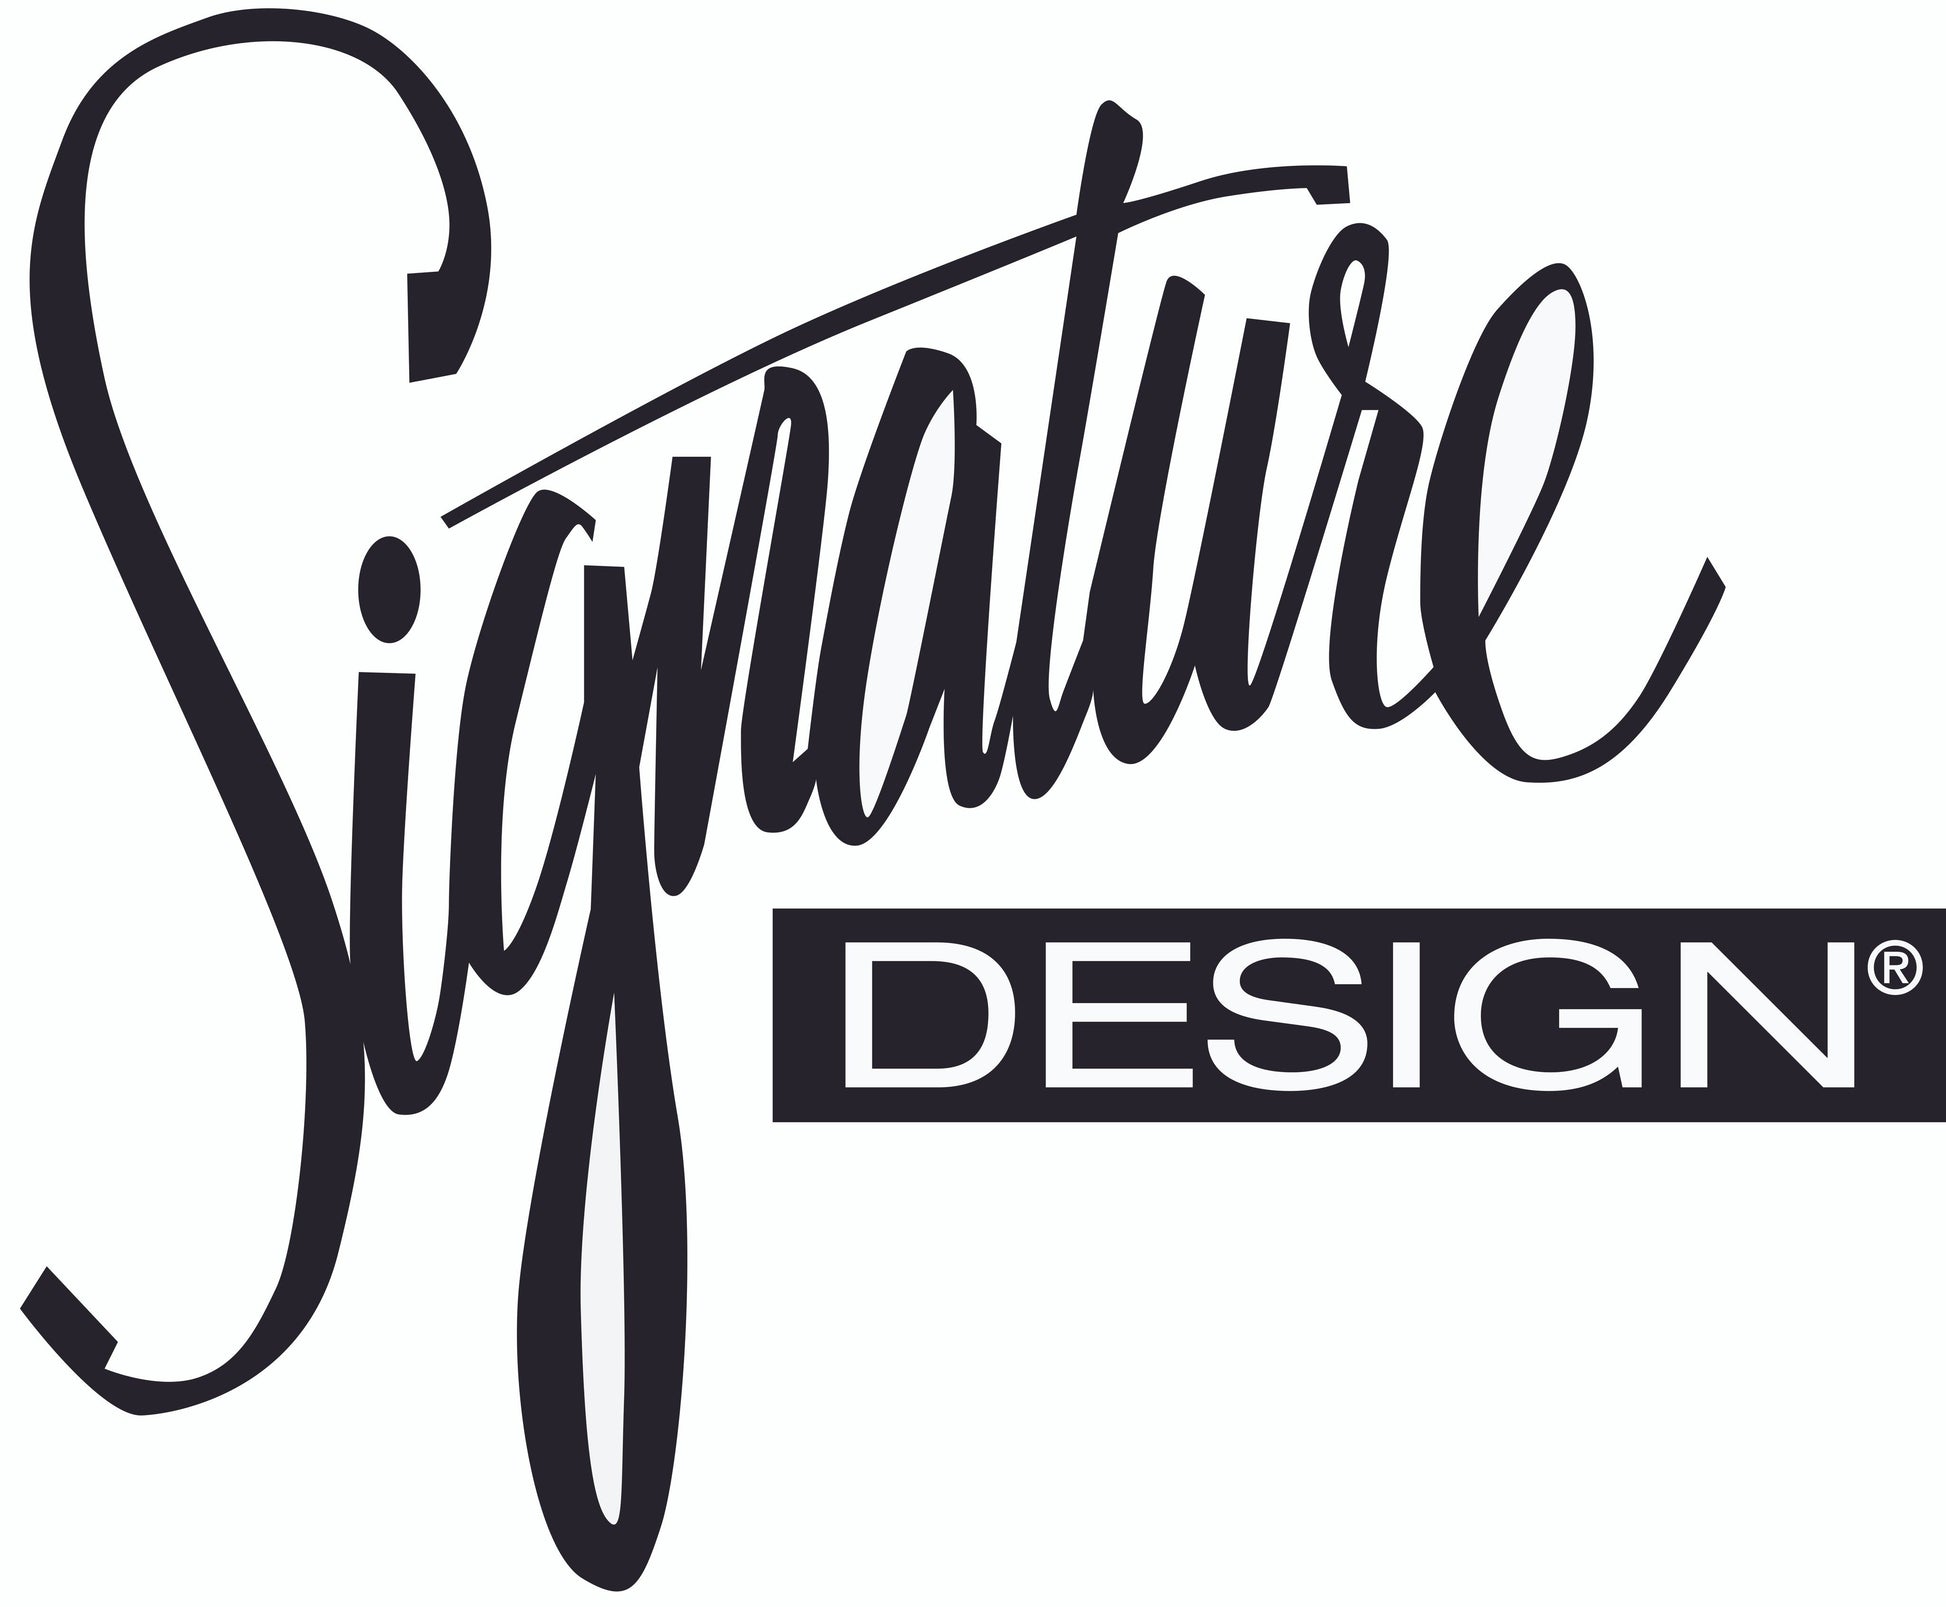 Deltona Queen Sofa Sleeper Signature Design by Ashley®